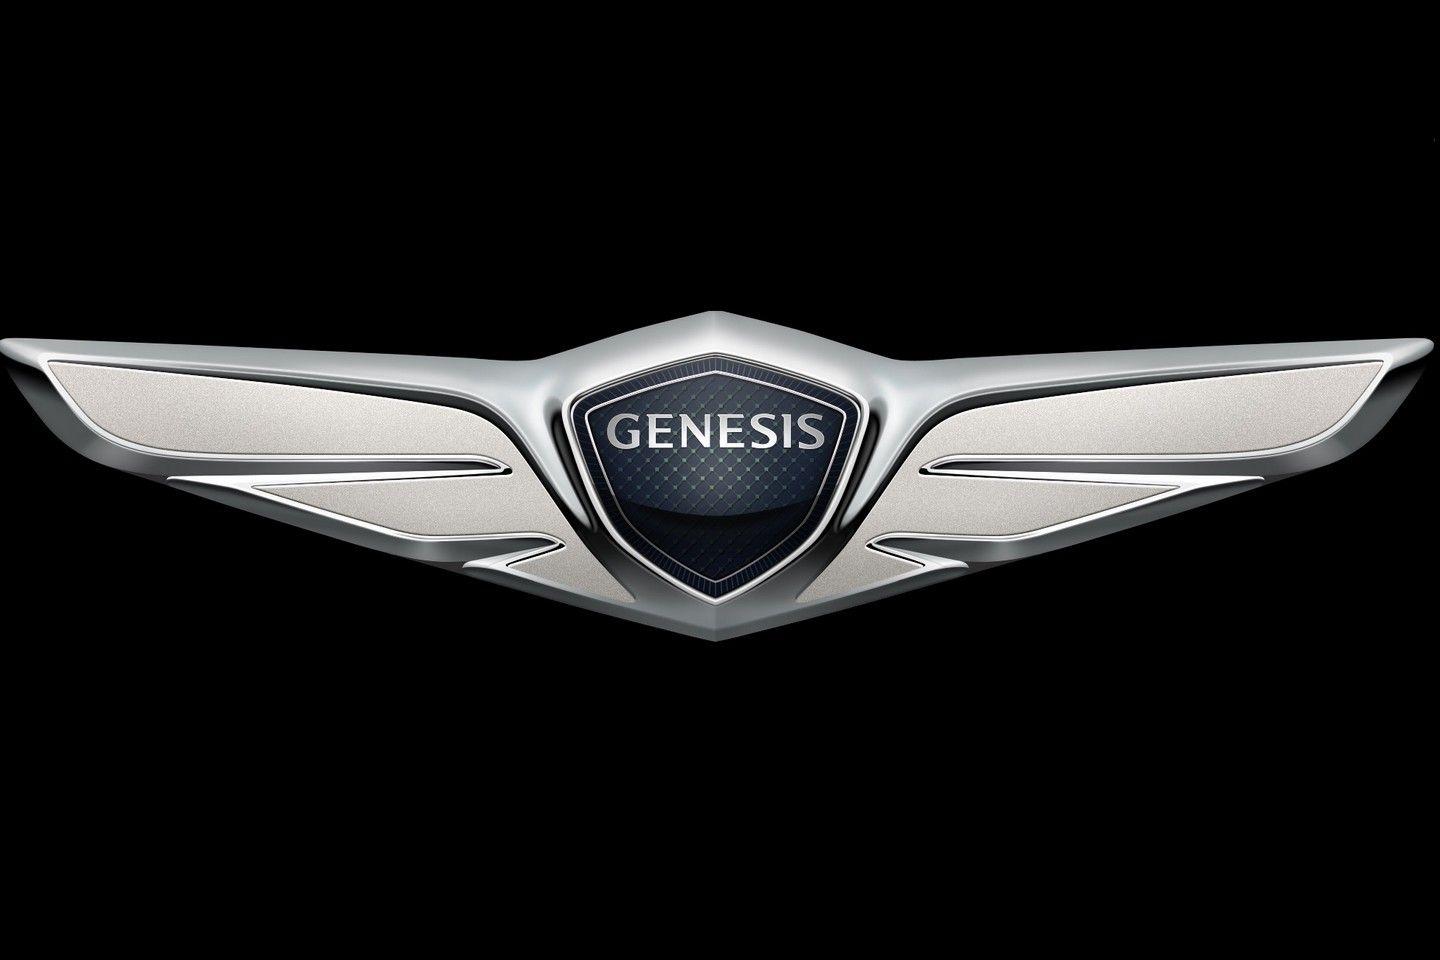 Hyundai Genesis Logo - Hyundai Genesis luxury brand logo - IN4RIDE